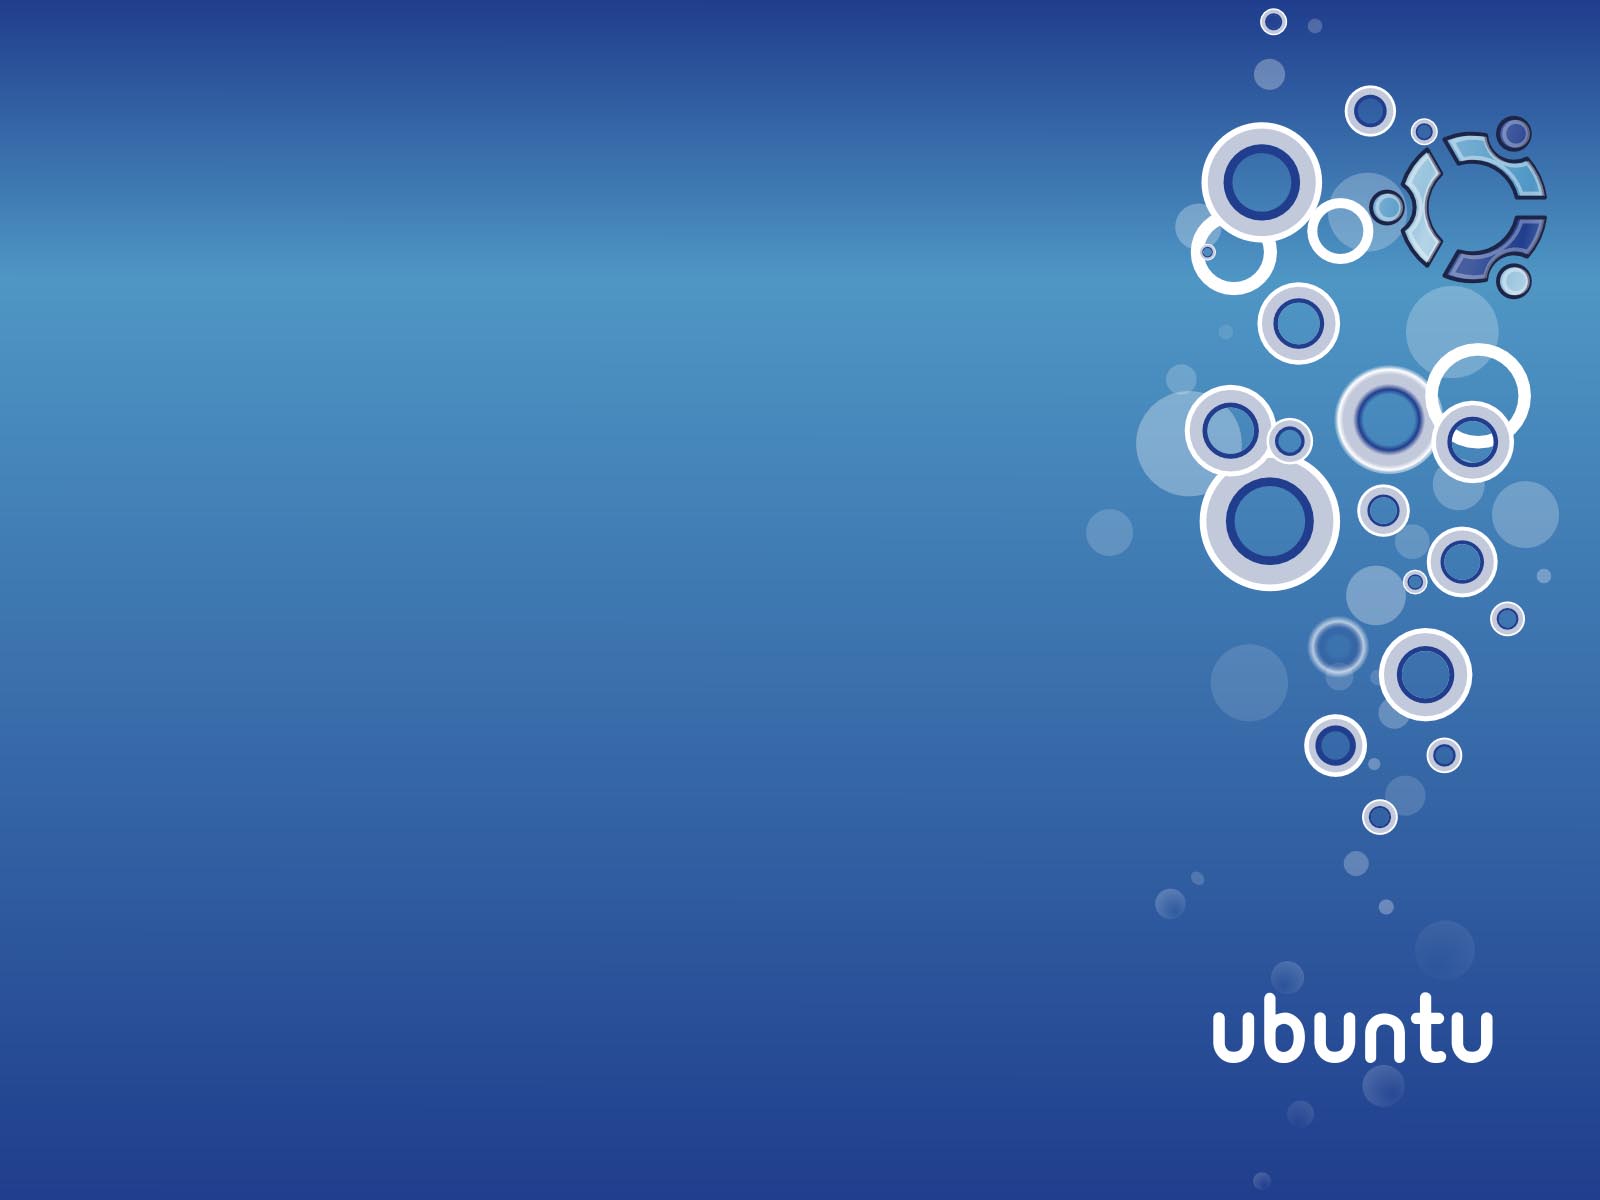 ubuntu desktop wallpaper   wwwhigh definition wallpapercom 1600x1200